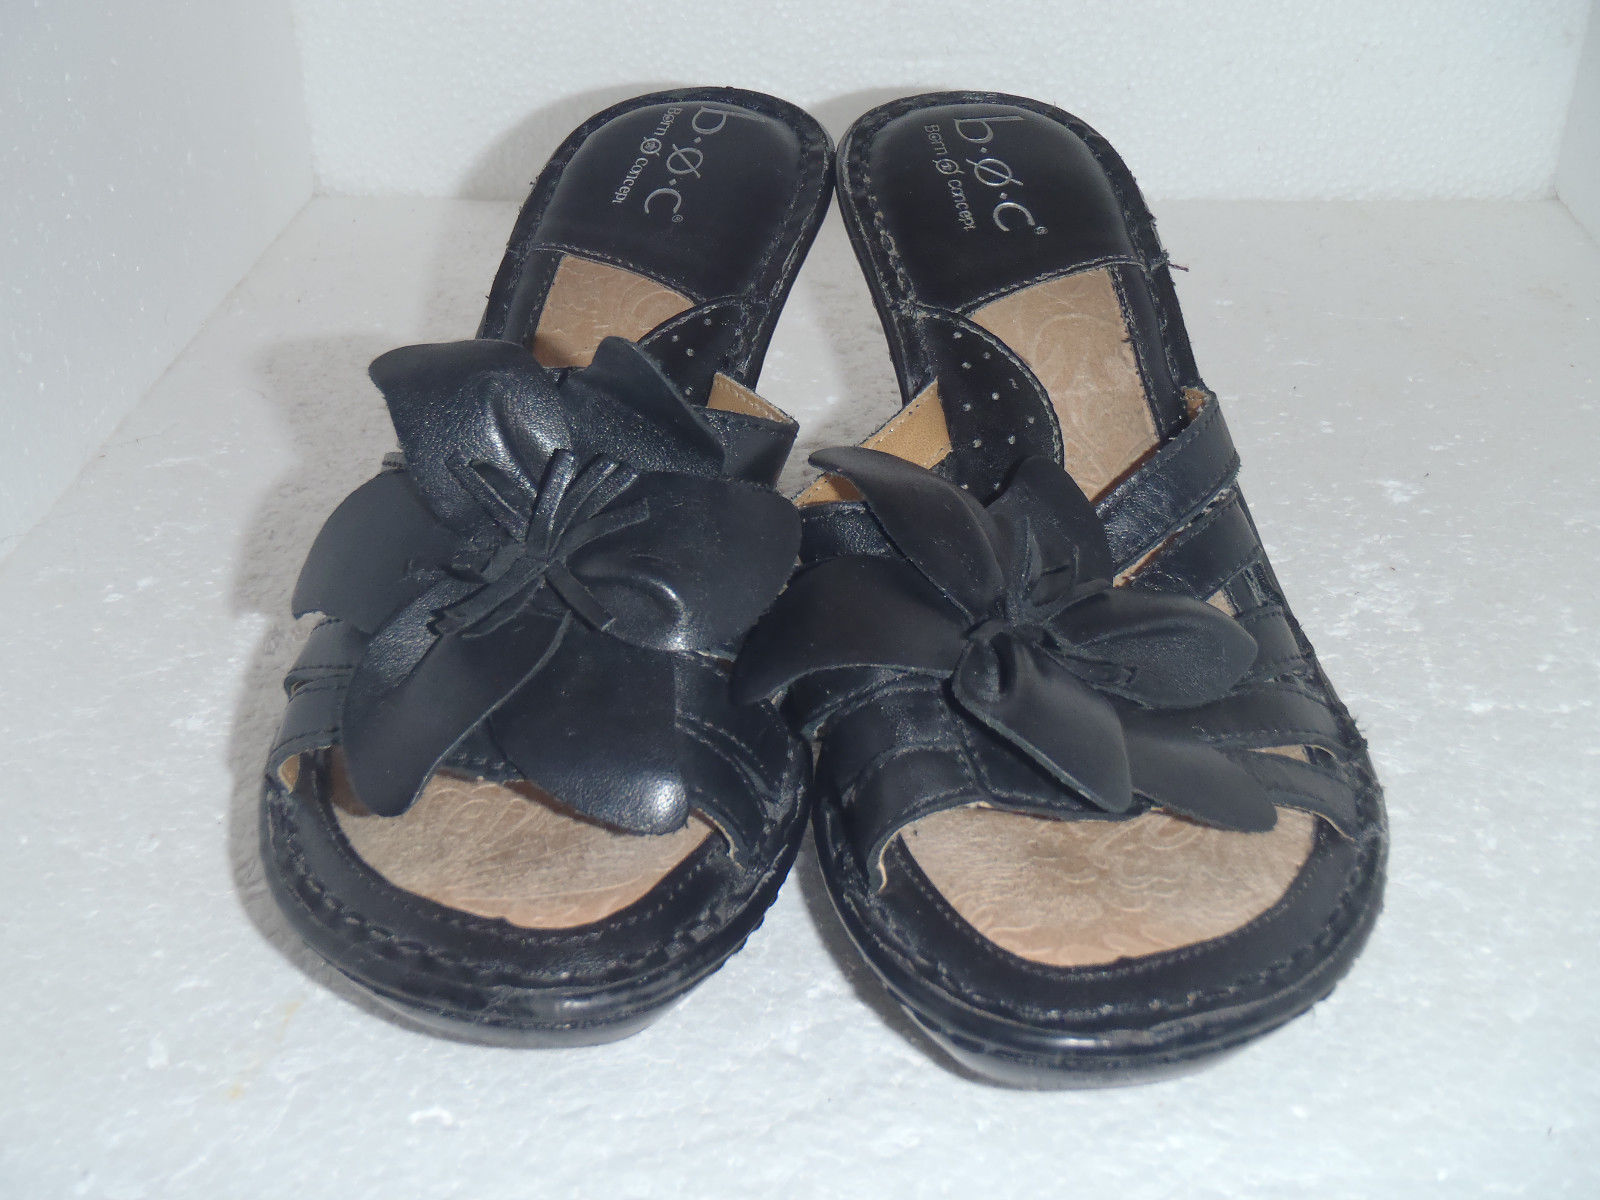 born comfort sandals